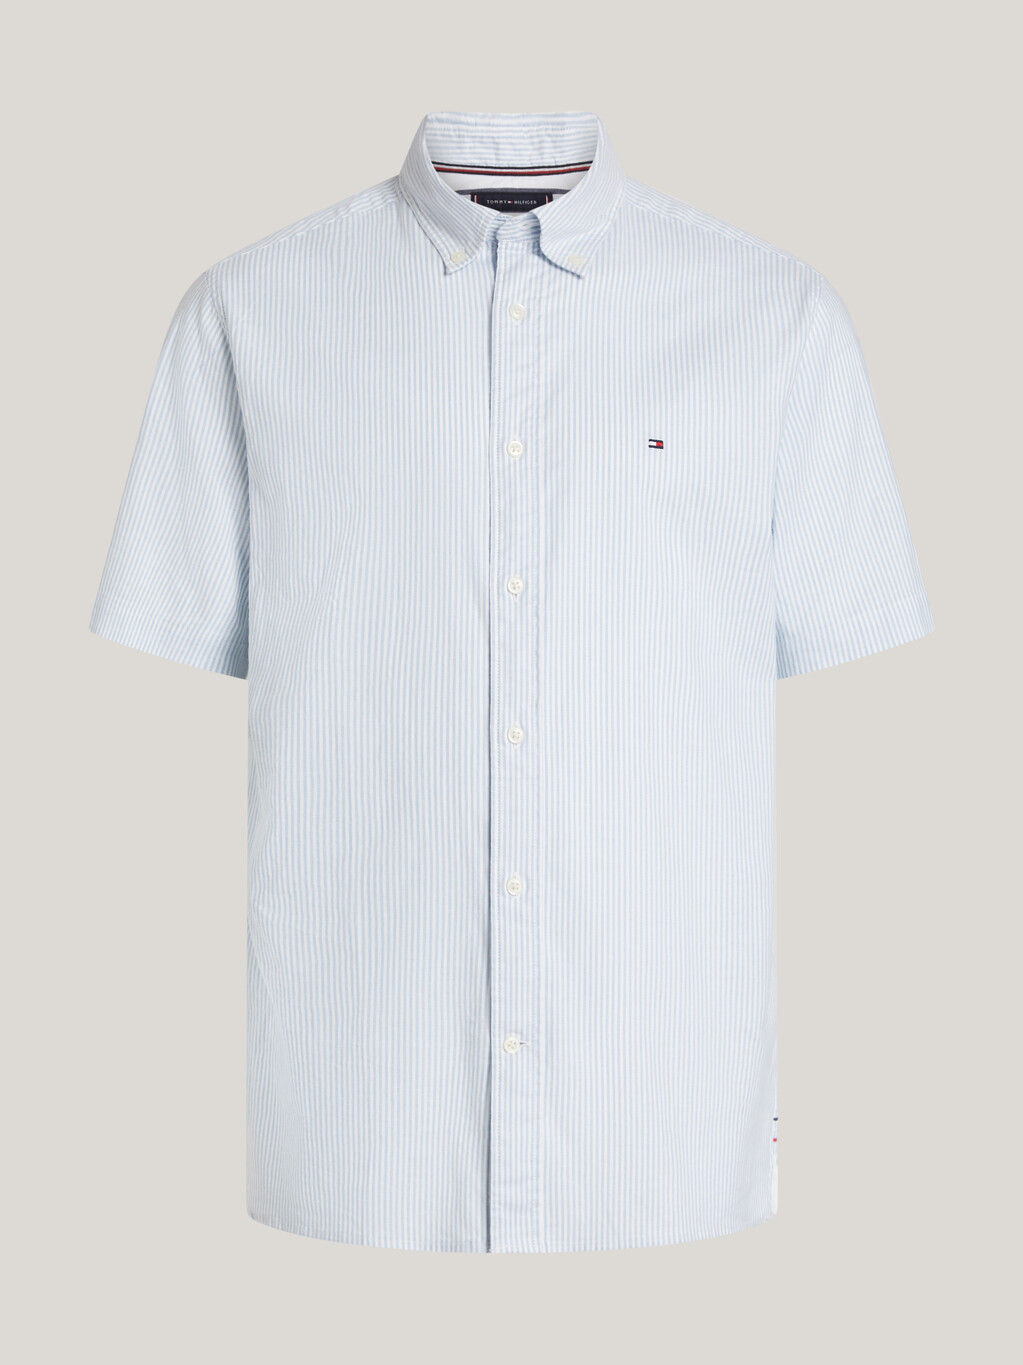 Flag Stripe Short Sleeve Shirt, Cloudy Blue / Optic White, hi-res